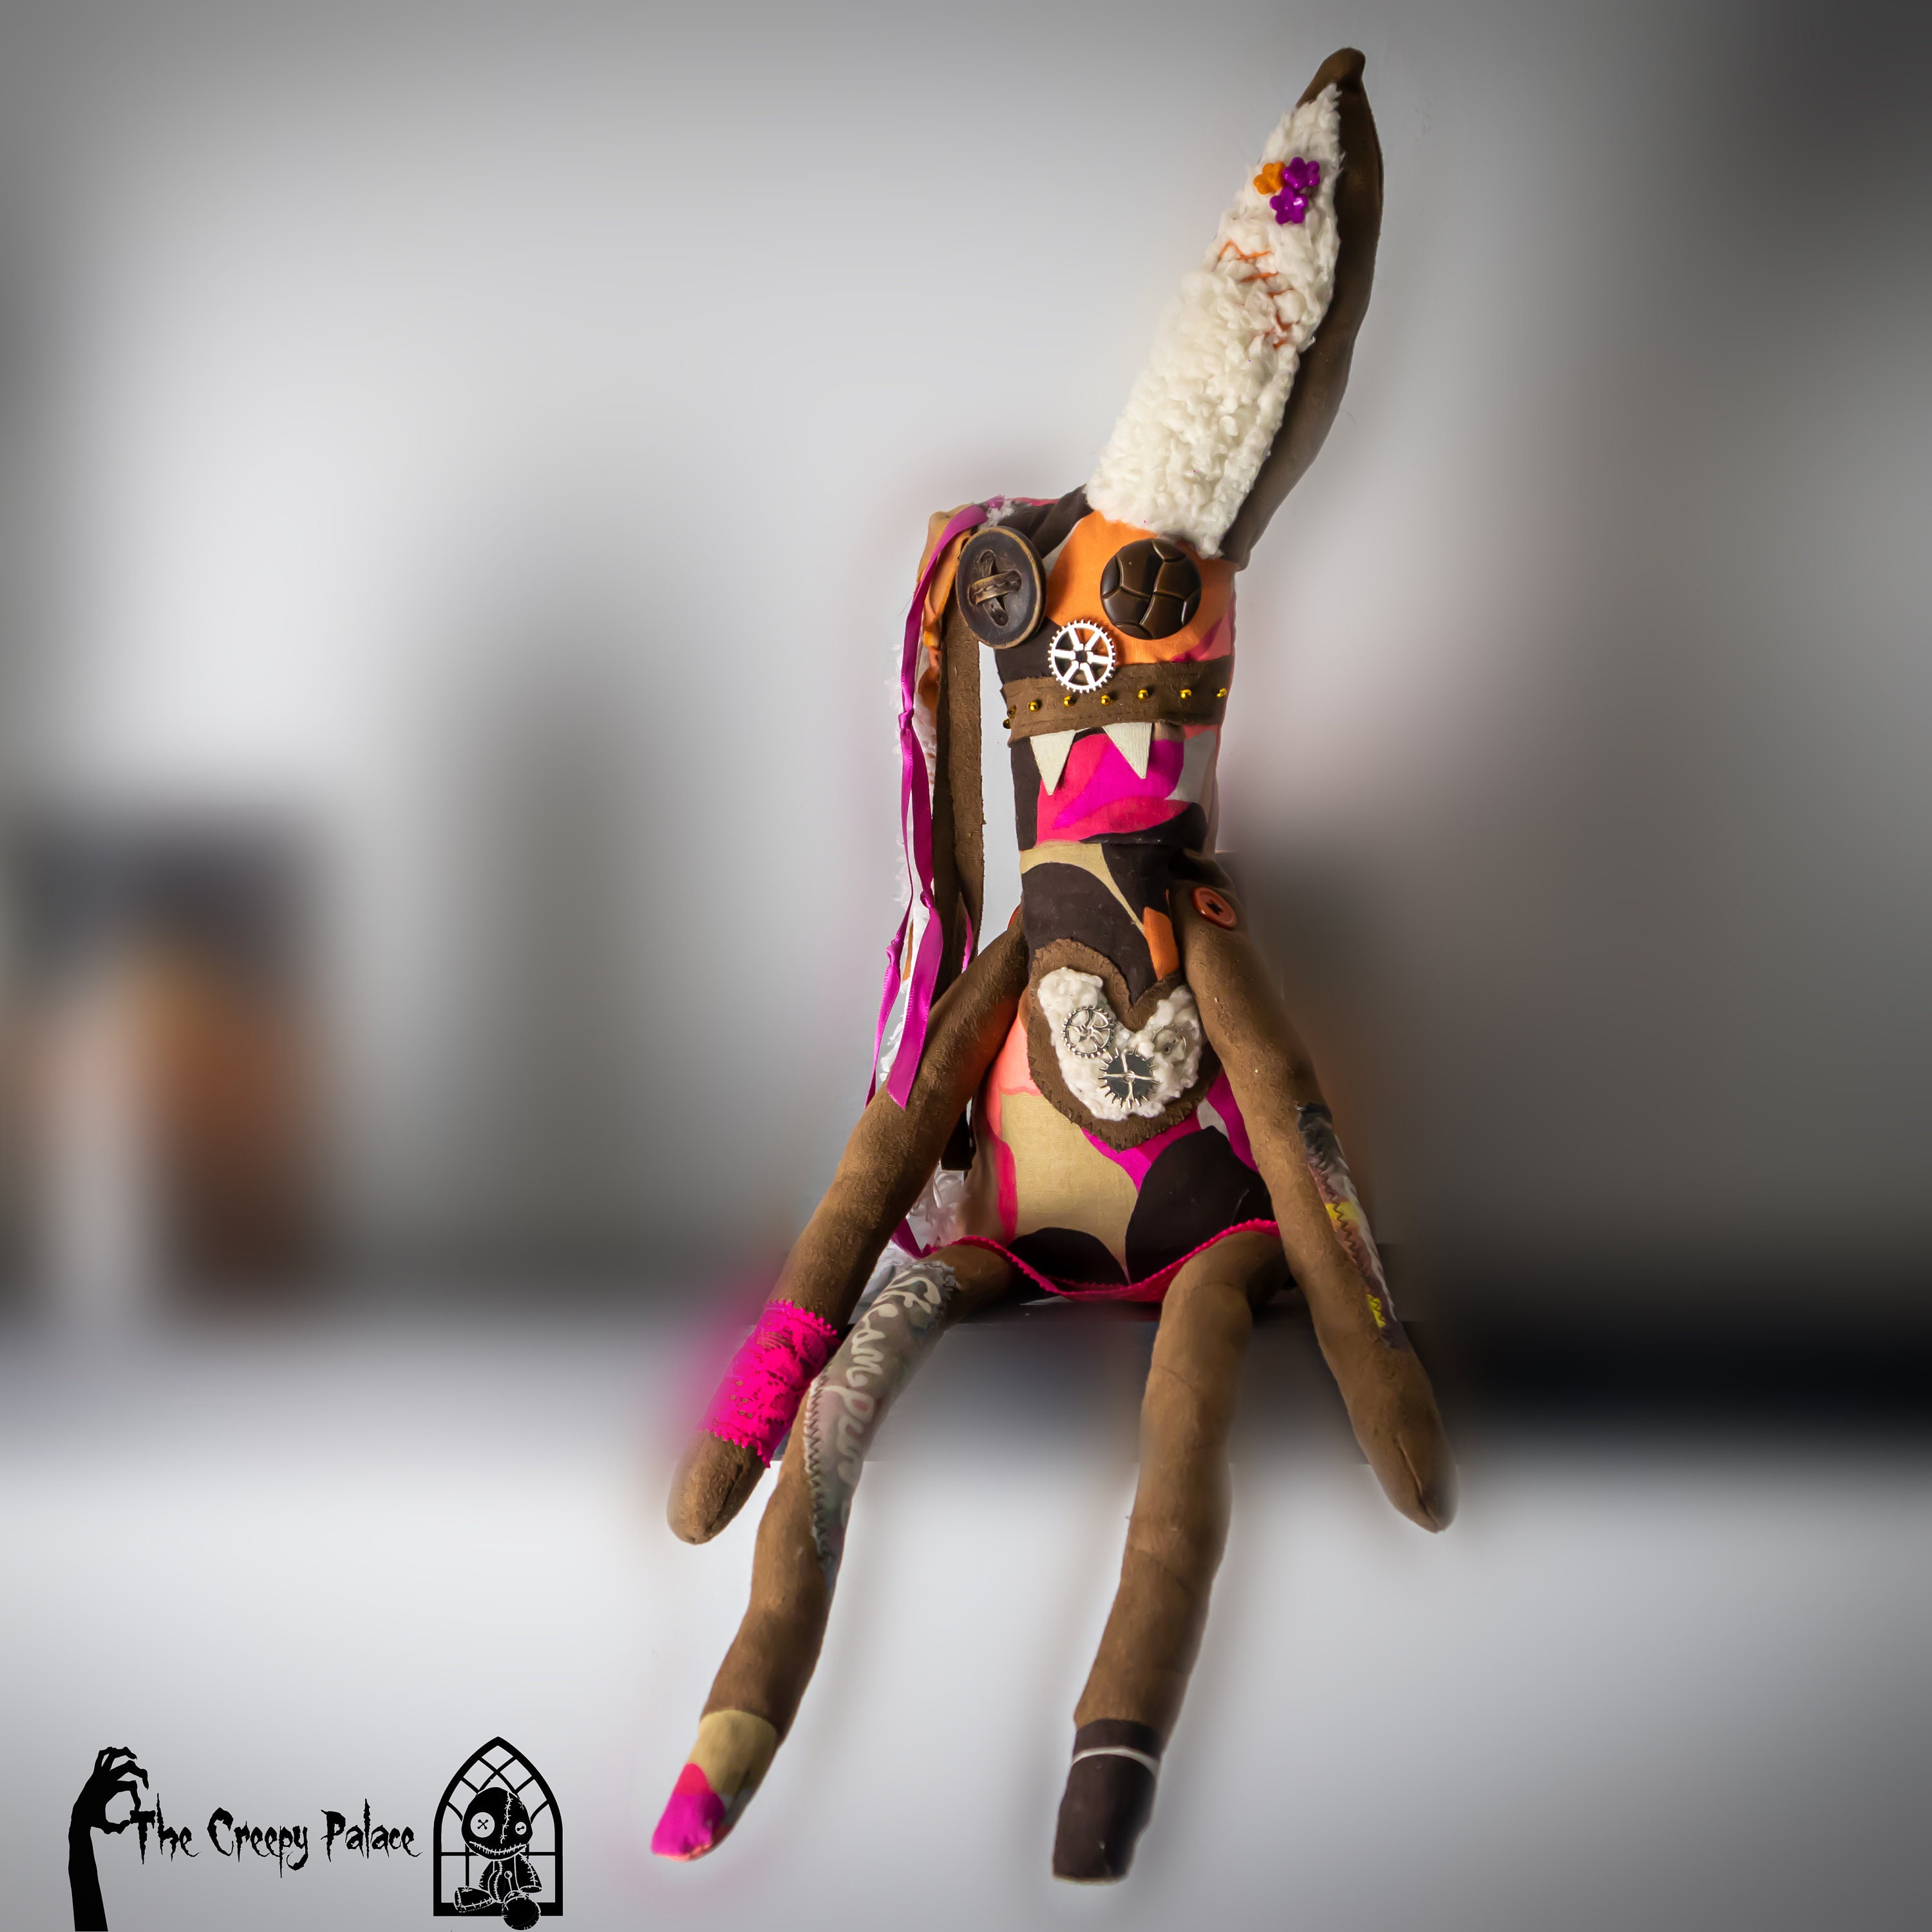 Cherry Bunny by SplitxMindxPlush on DeviantArt  Cute dolls, Creepy stuffed  animals, Doll plushies